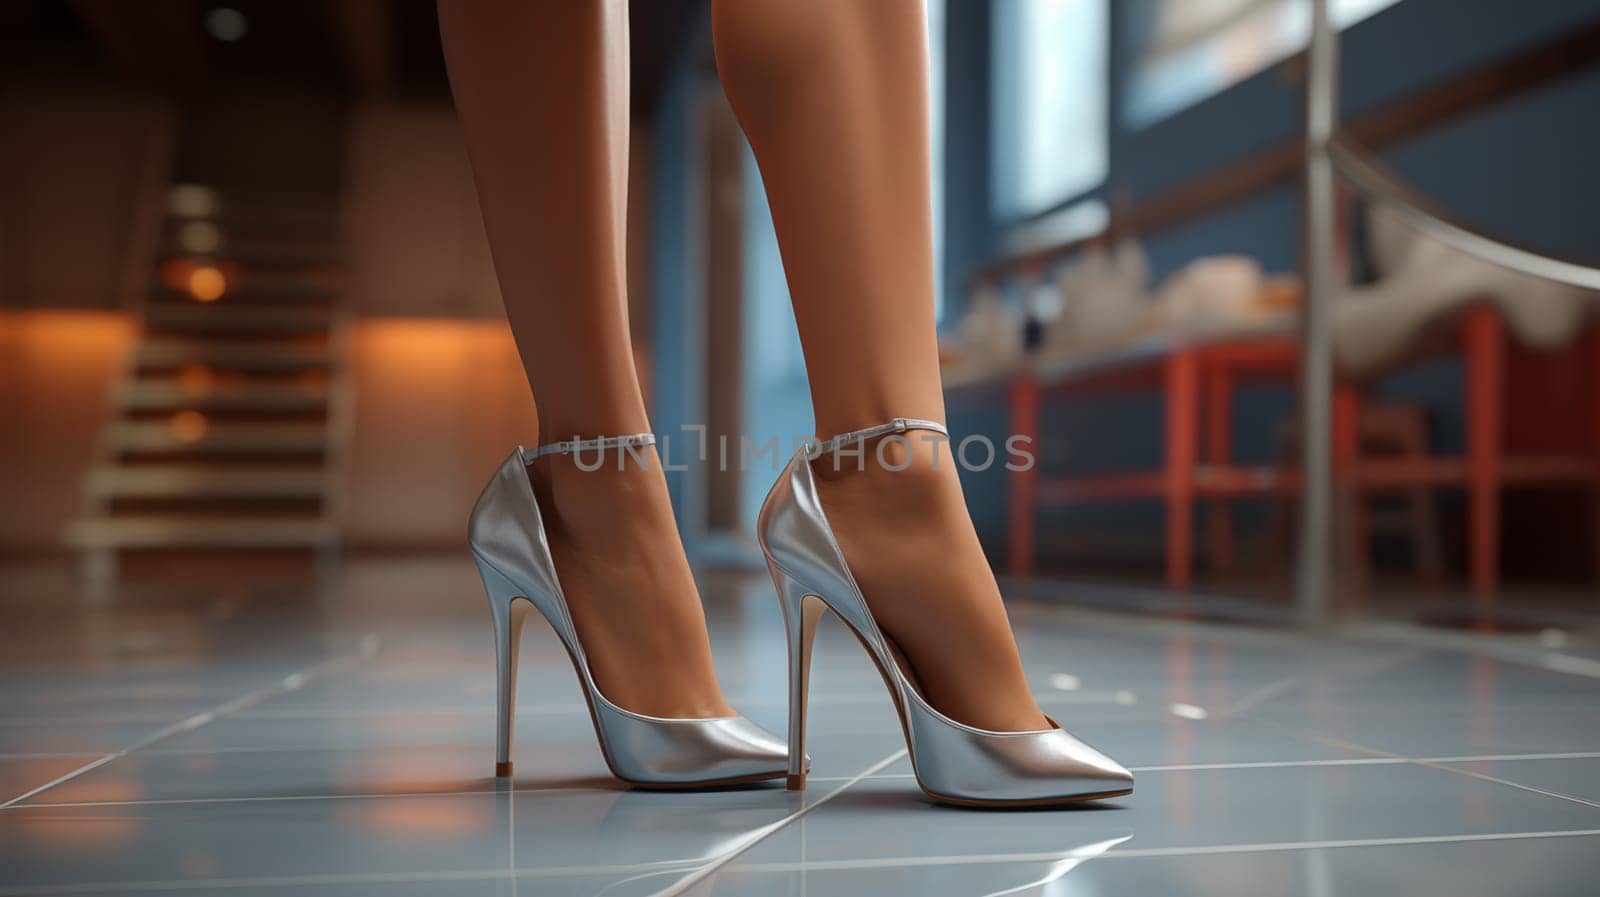 A woman's legs in silver high heels, poised on a sleek interior floor.